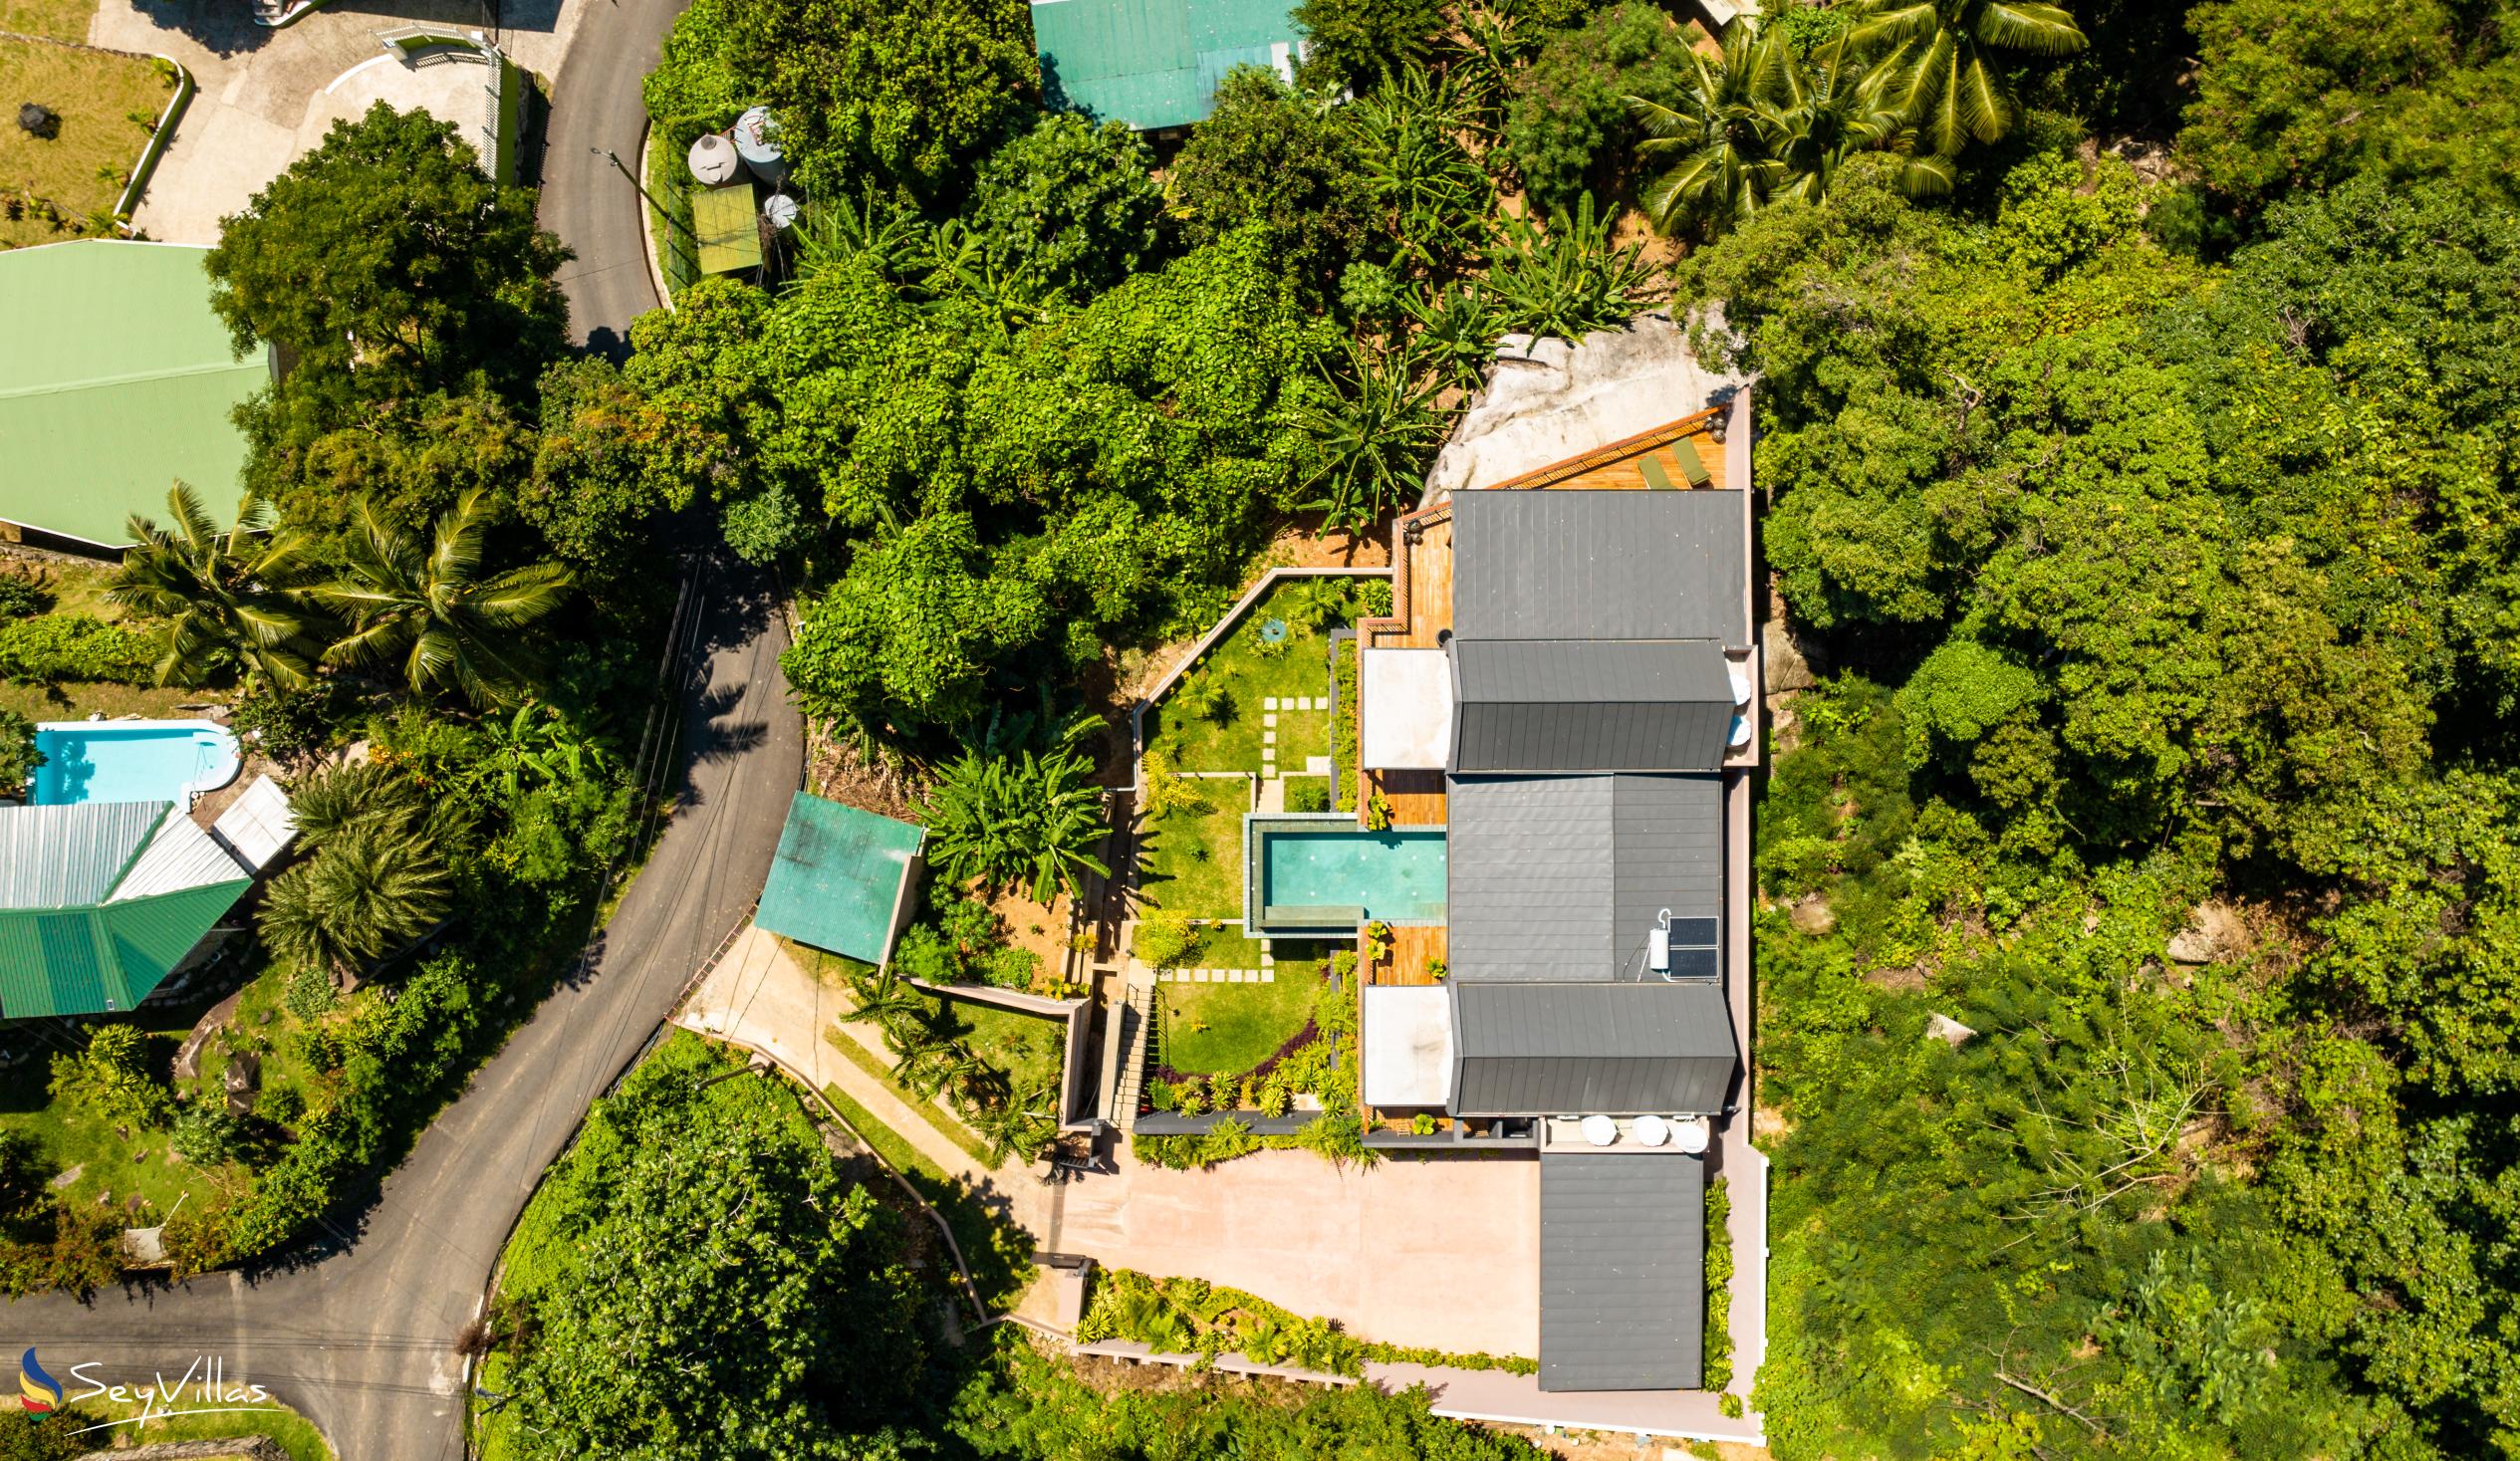 Foto 13: Maison Gaia - Aussenbereich - Mahé (Seychellen)